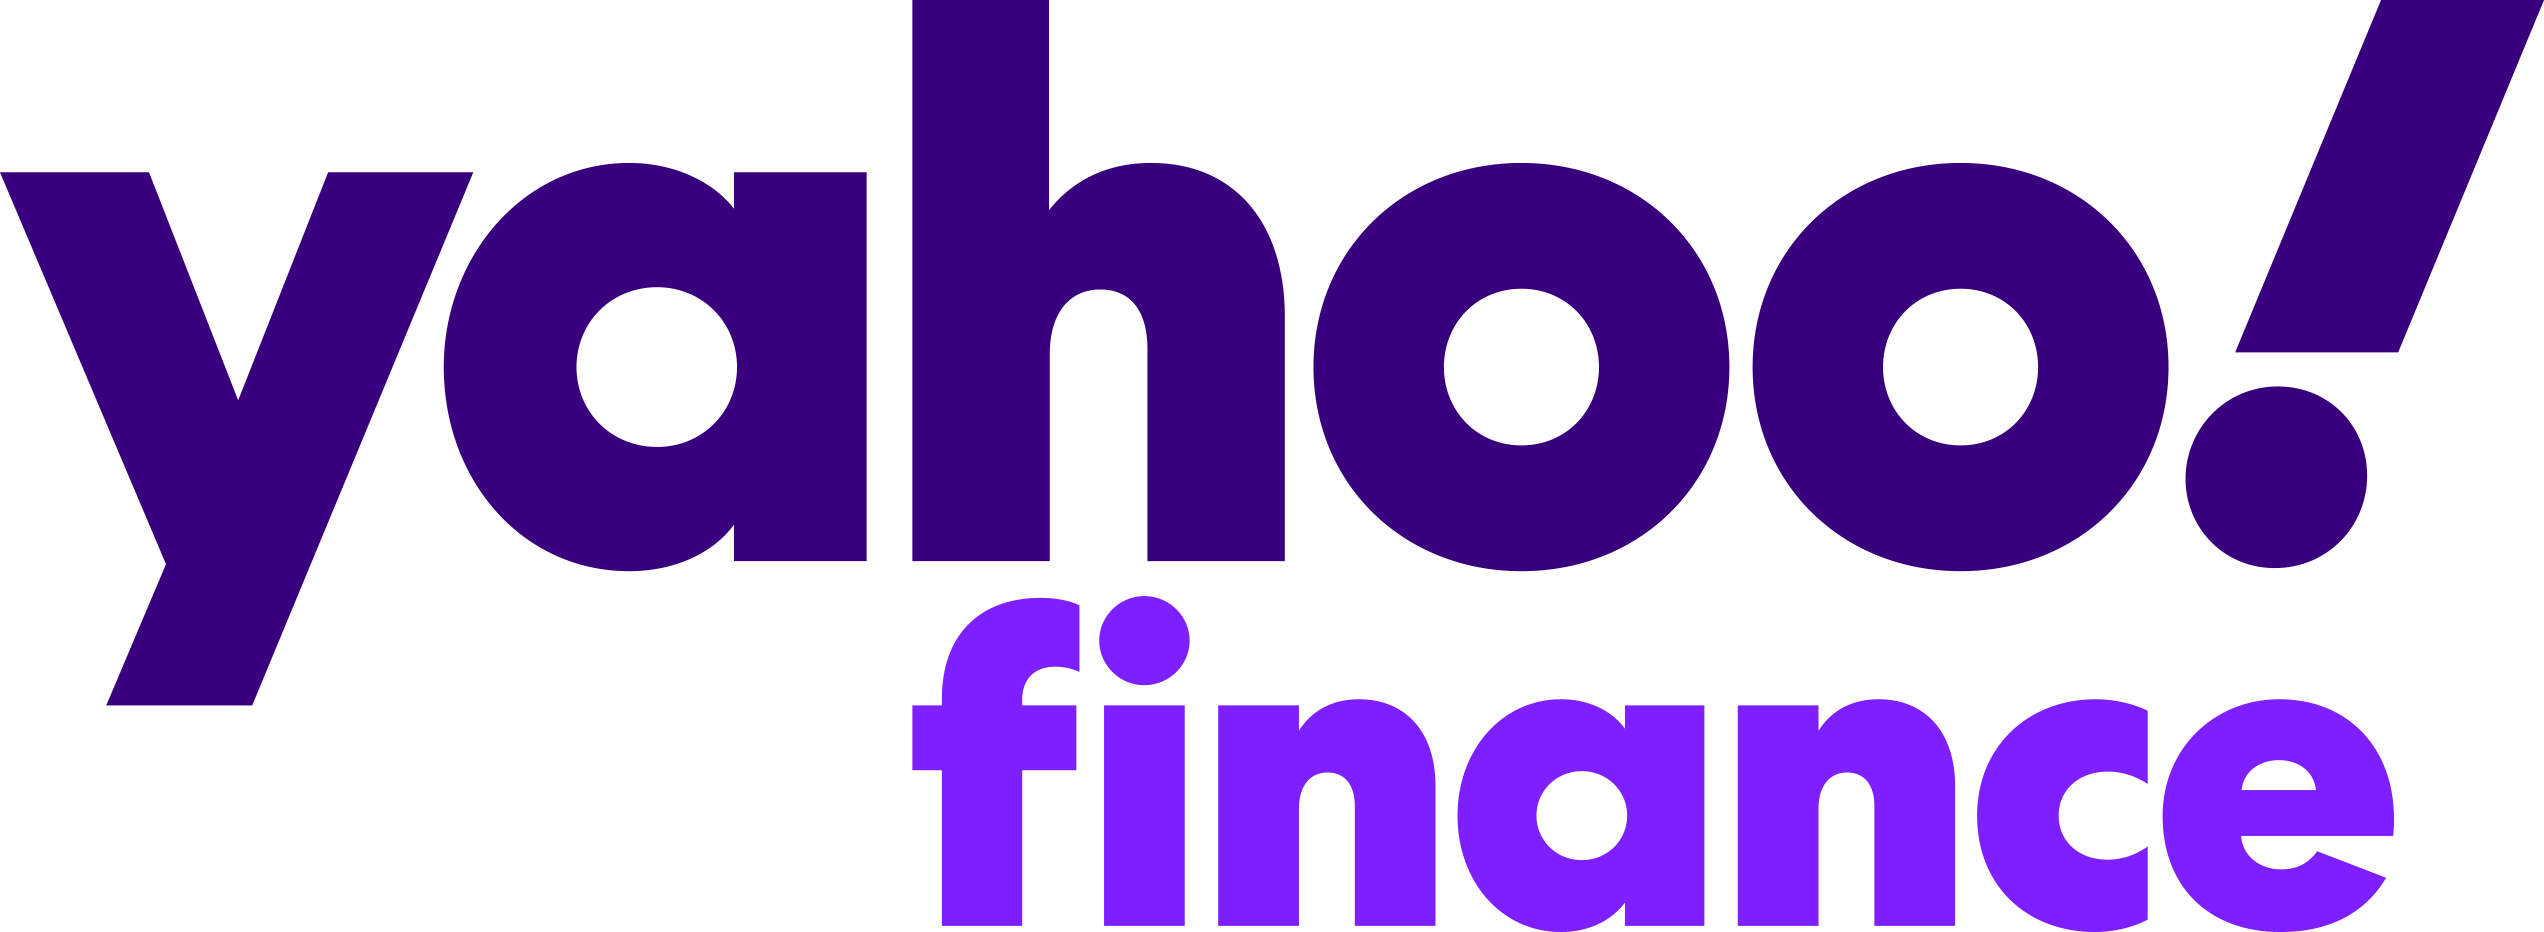 yahoo-finance-2020